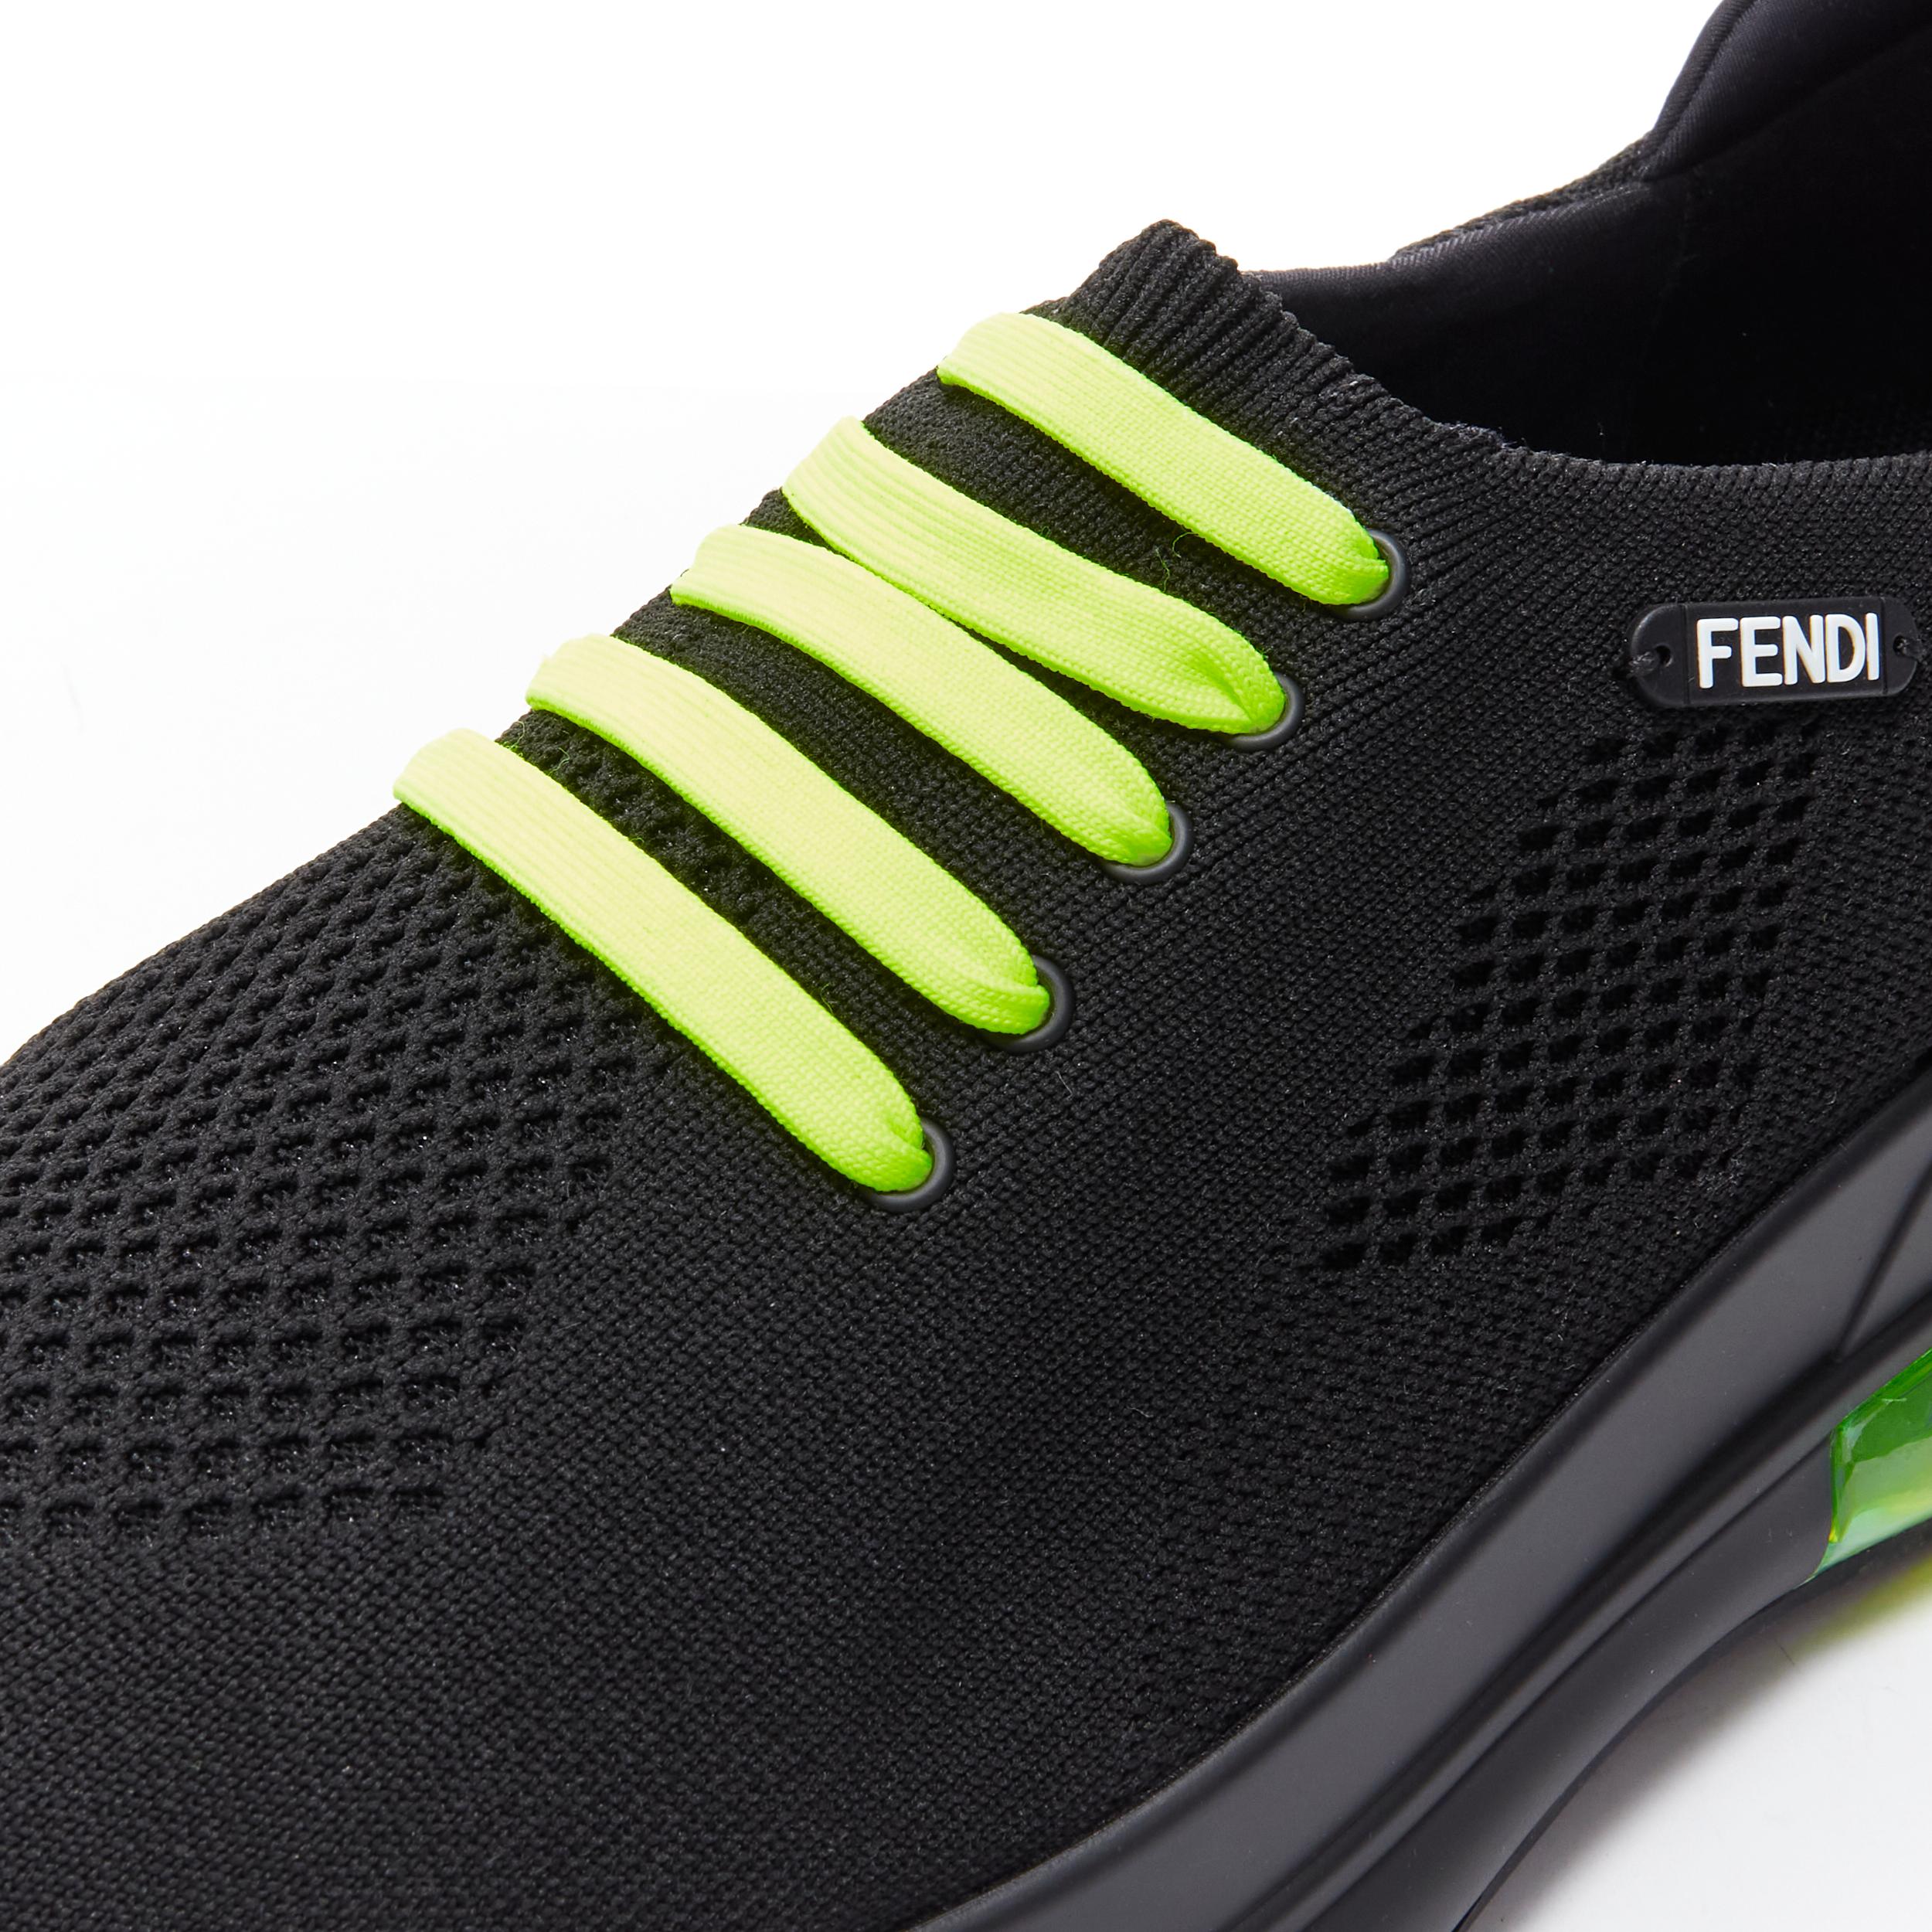 Men's new FENDI 2019 black knit neon yellow air sole low runner sneaker 7E1234 EU44 For Sale